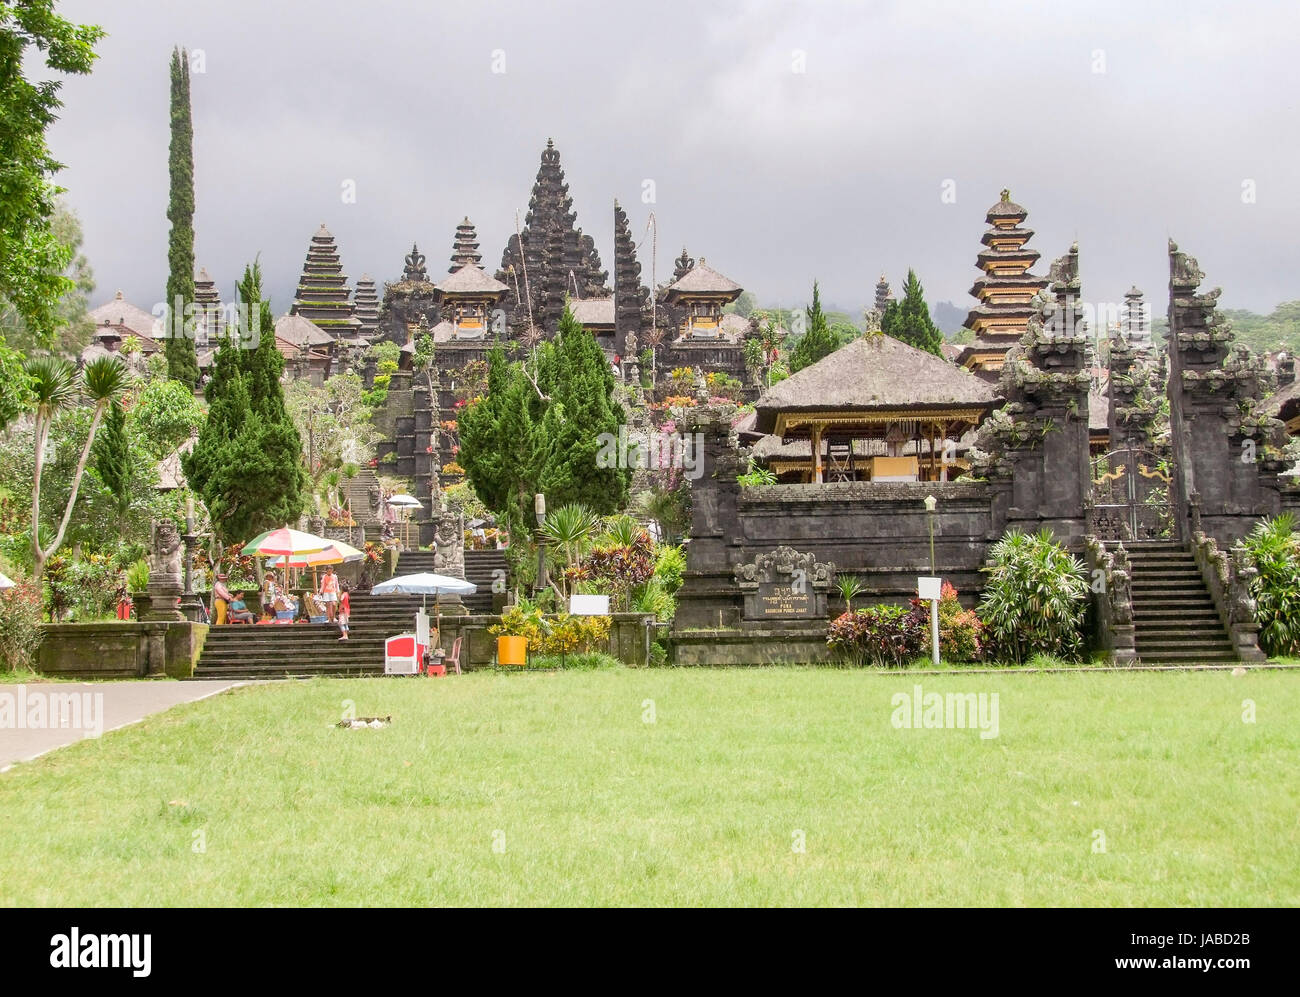 temple complex named Pura Besakih in Bali, Indonesia Stock Photo